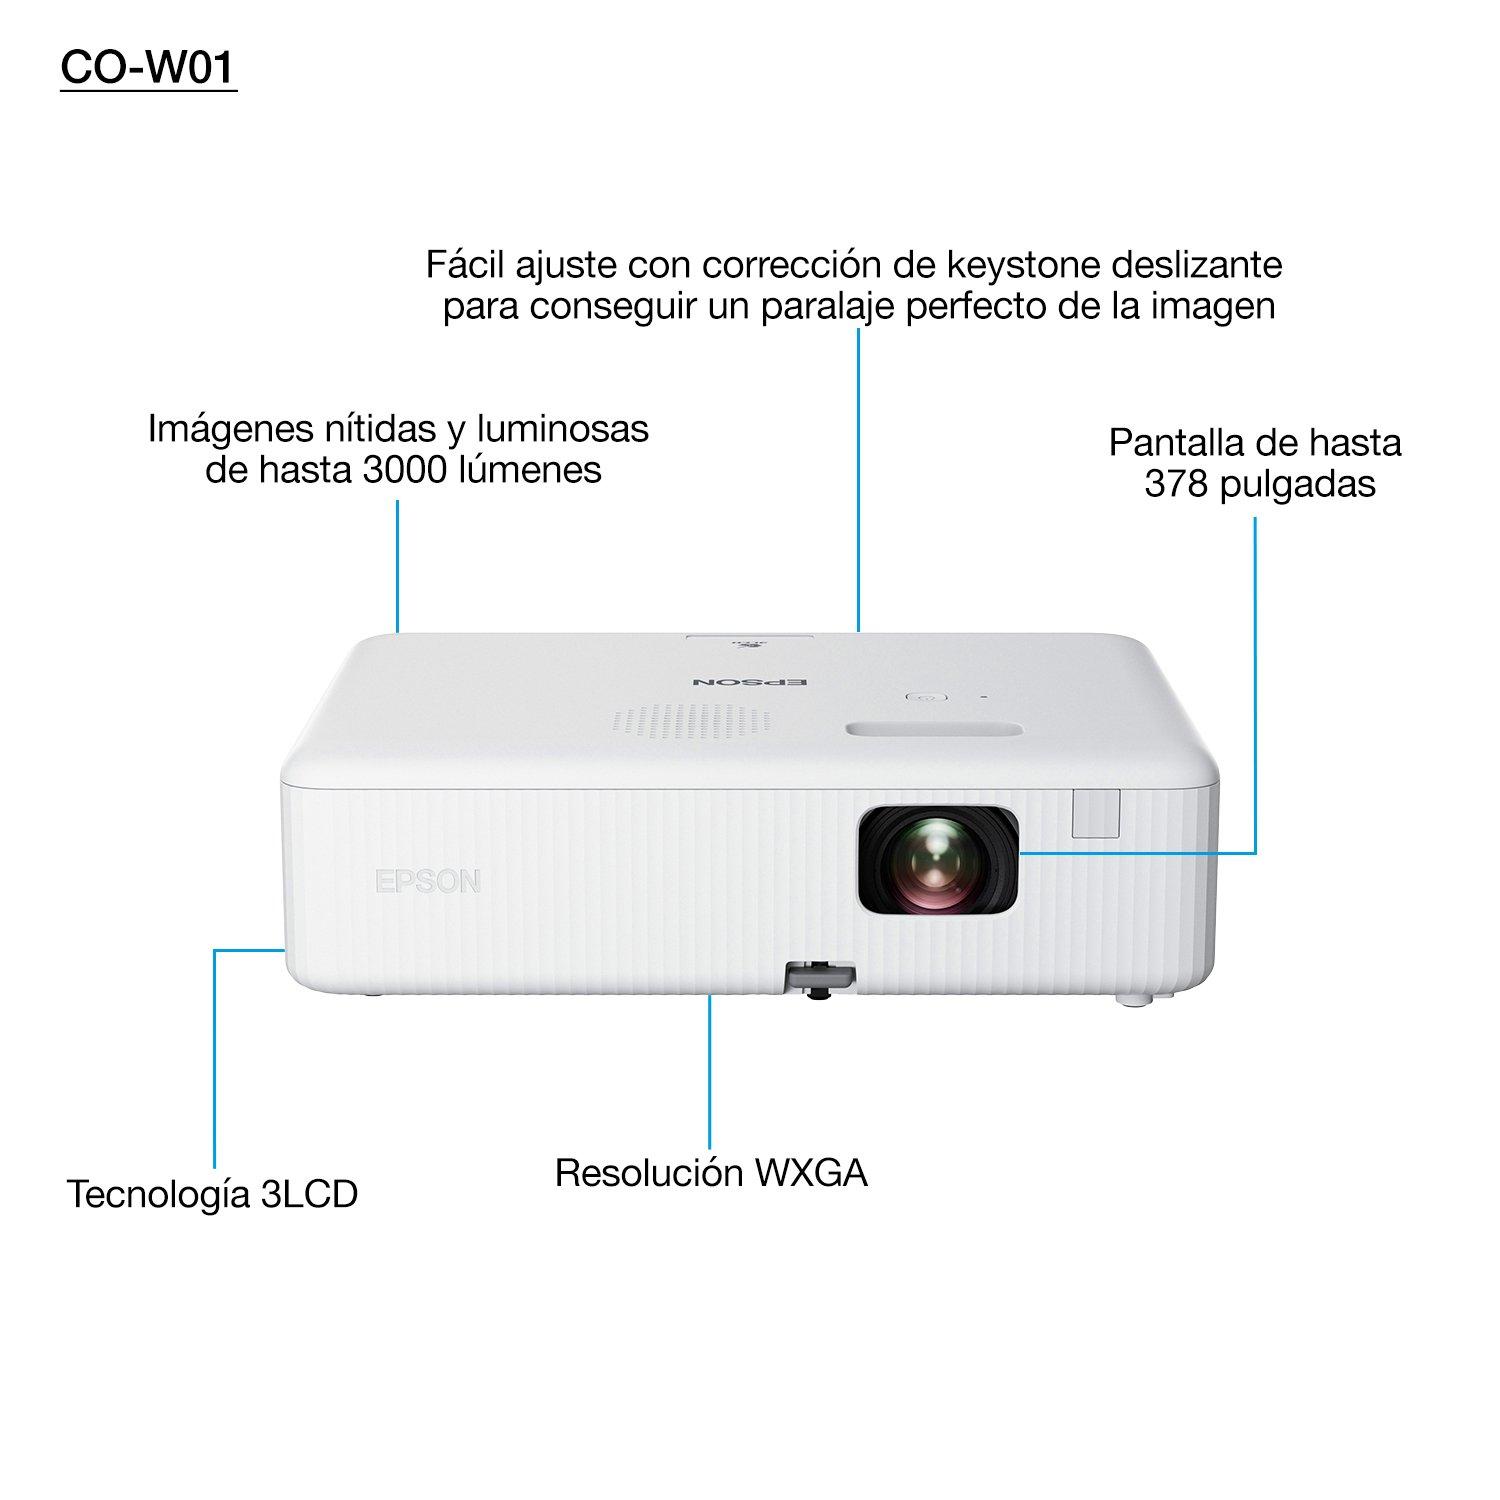 Epson Proyector WXGA CO-W01 | Costco México